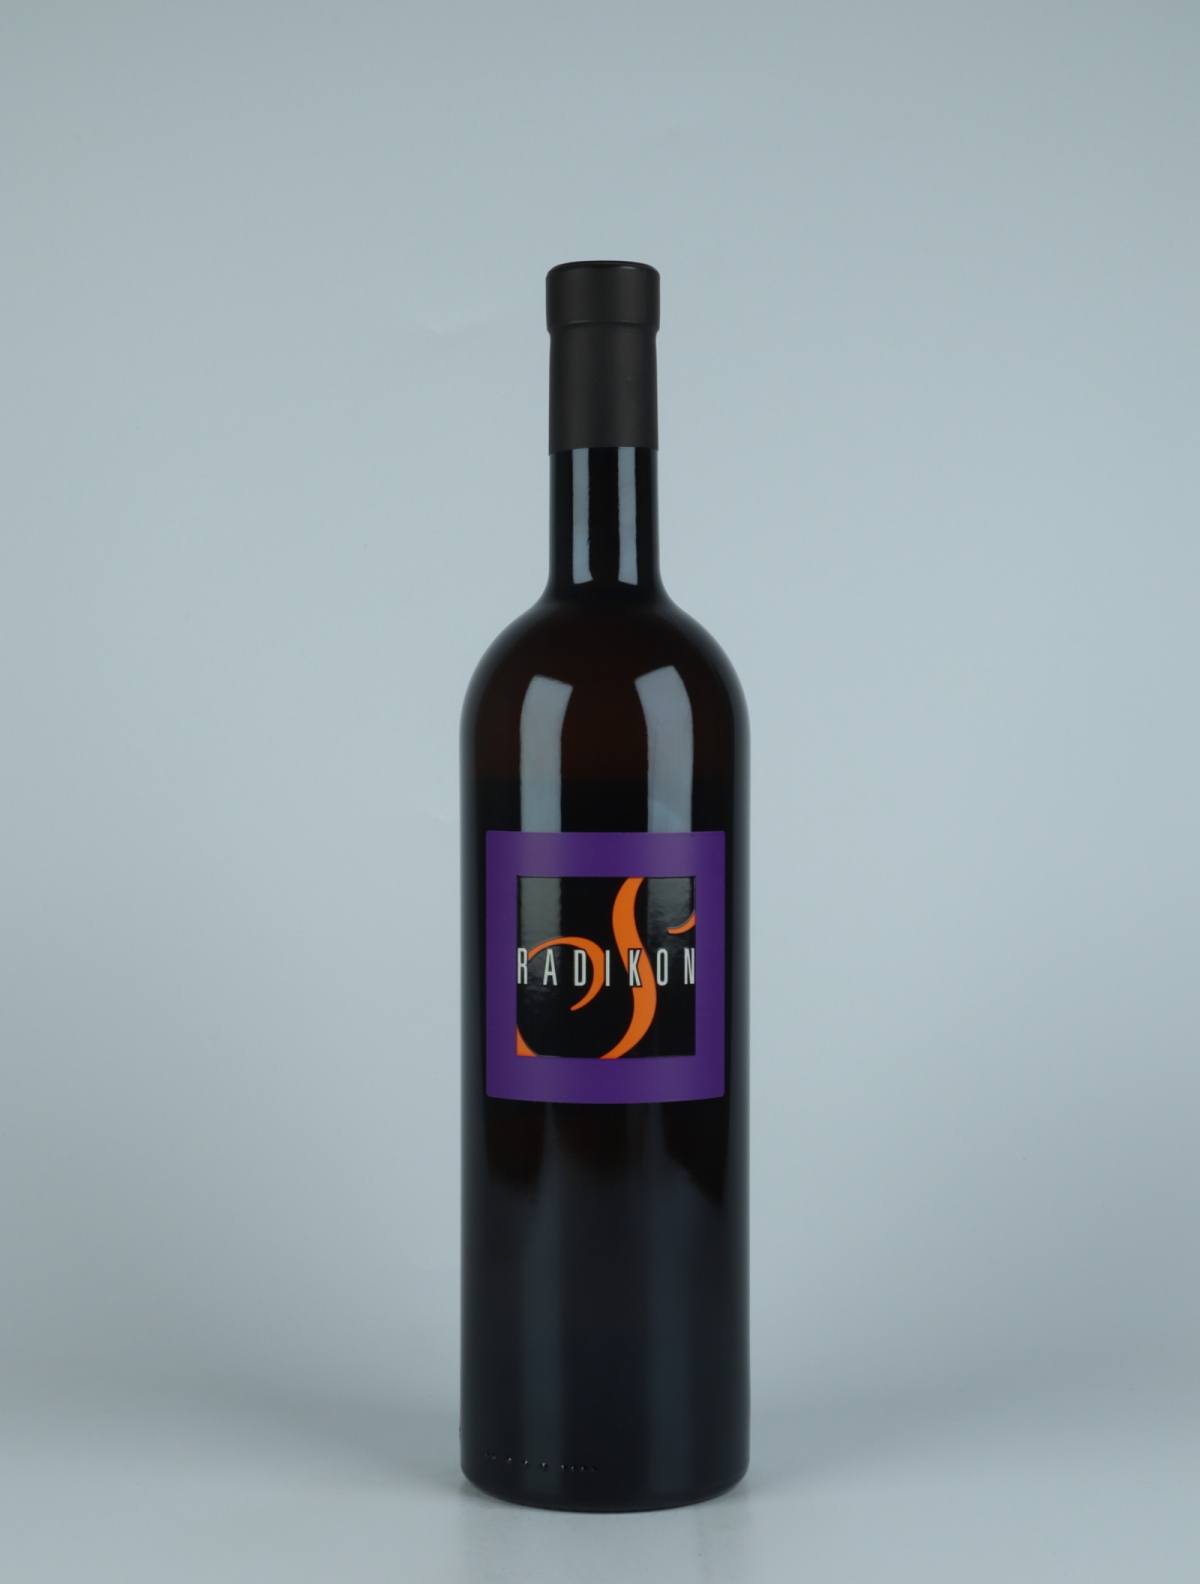 En flaske 2020 Slatnik Orange vin fra Radikon, Friuli i Italien